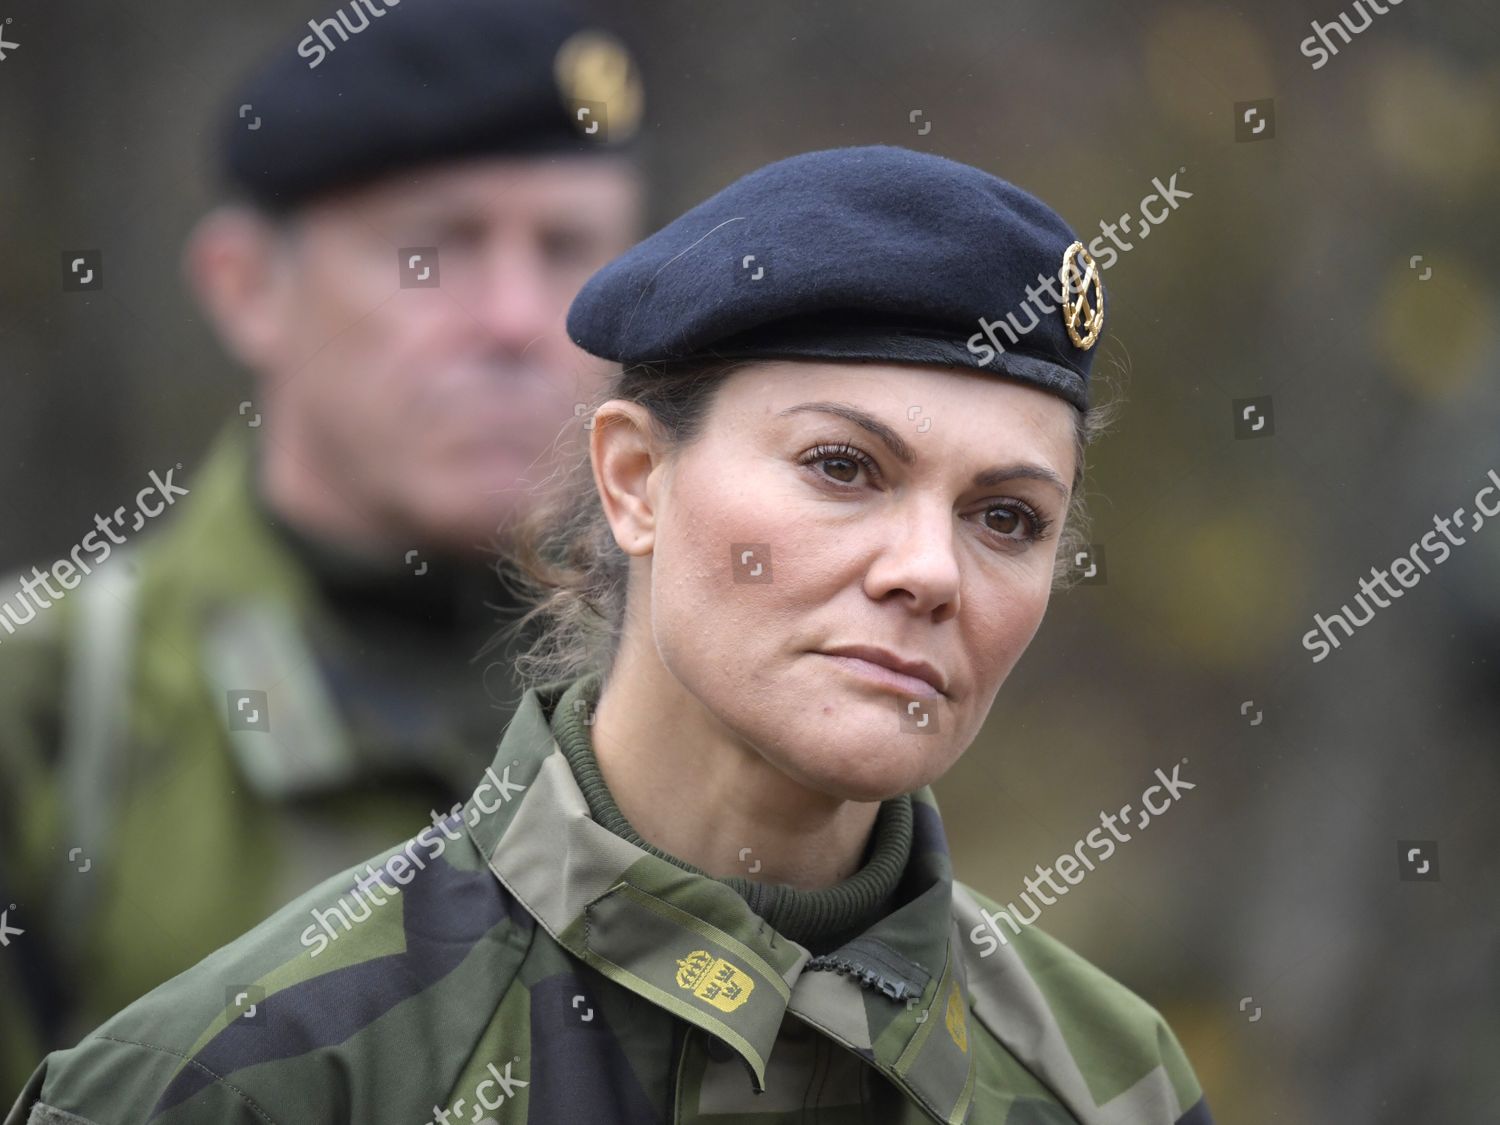 crown-princess-victoria-visits-the-swedish-home-guard-salenfjallen-sweden-shutterstock-editorial-12502339j.jpg